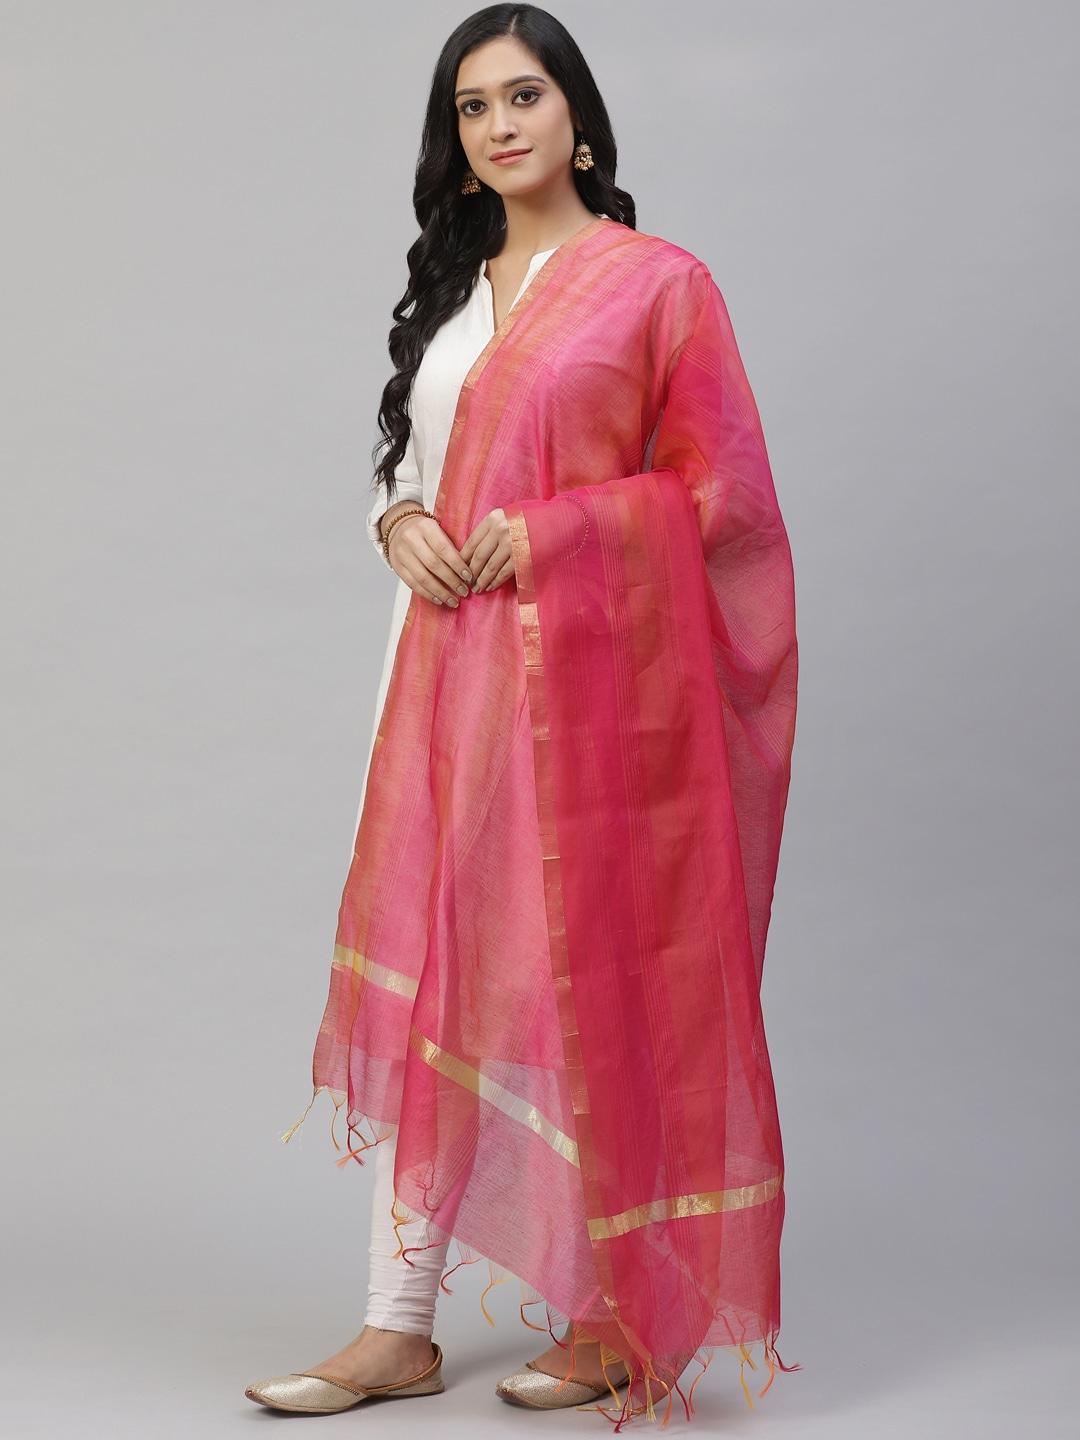 swatika-pink-&-orange-handloom-zari-solid-bhagalpuri-dupatta